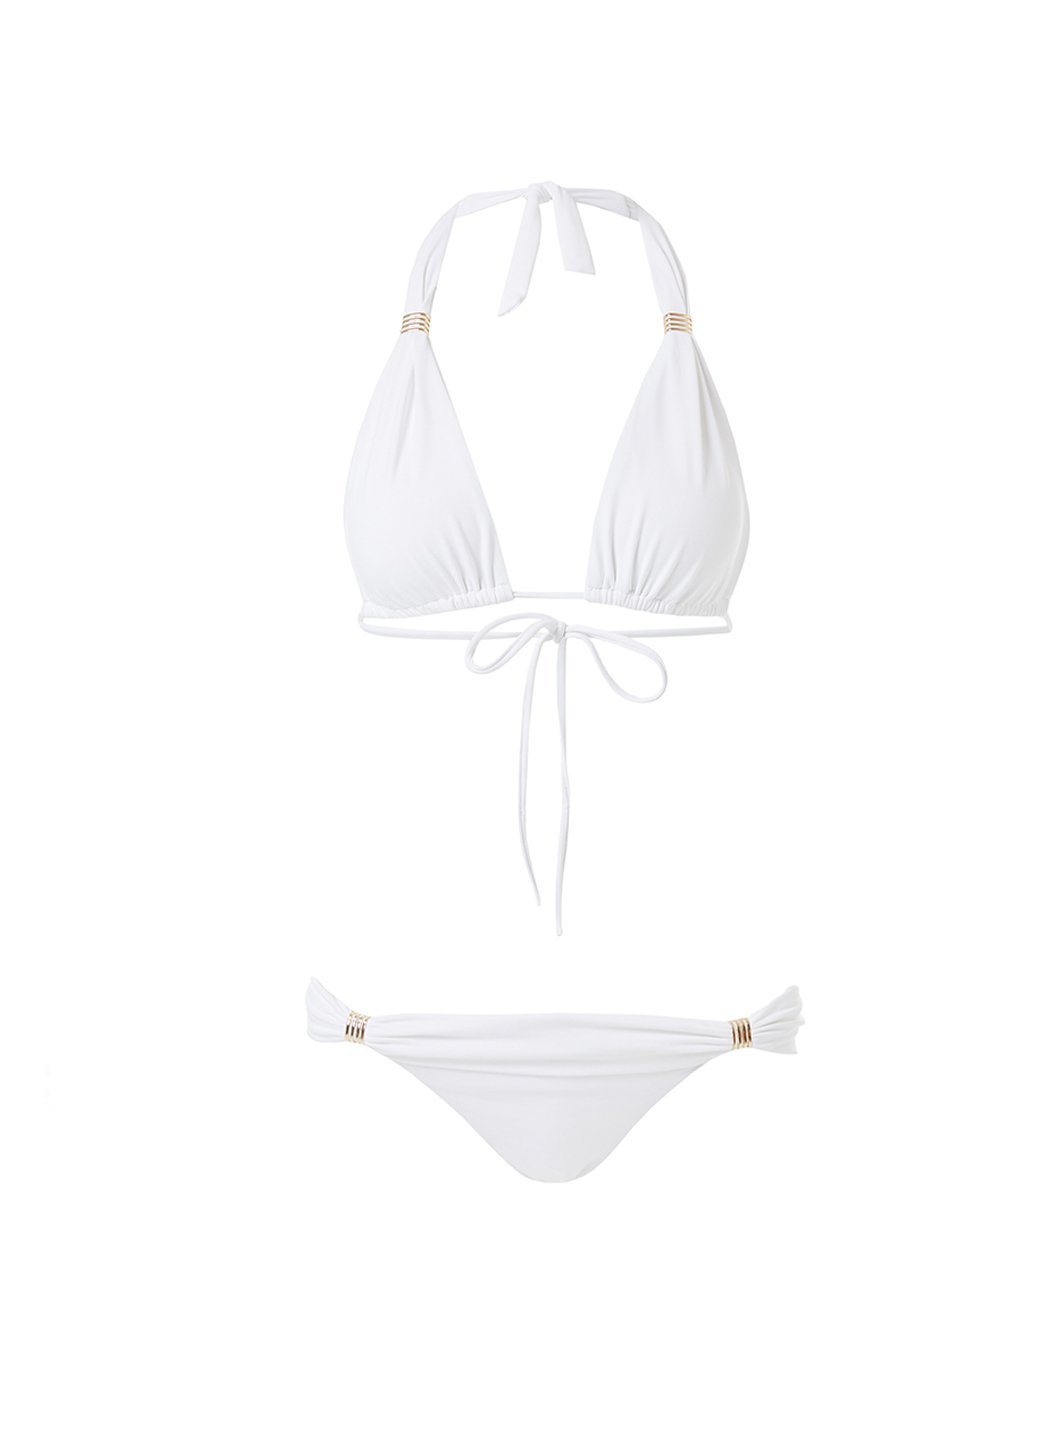 grenada white adjustable halterneck bikini 2019